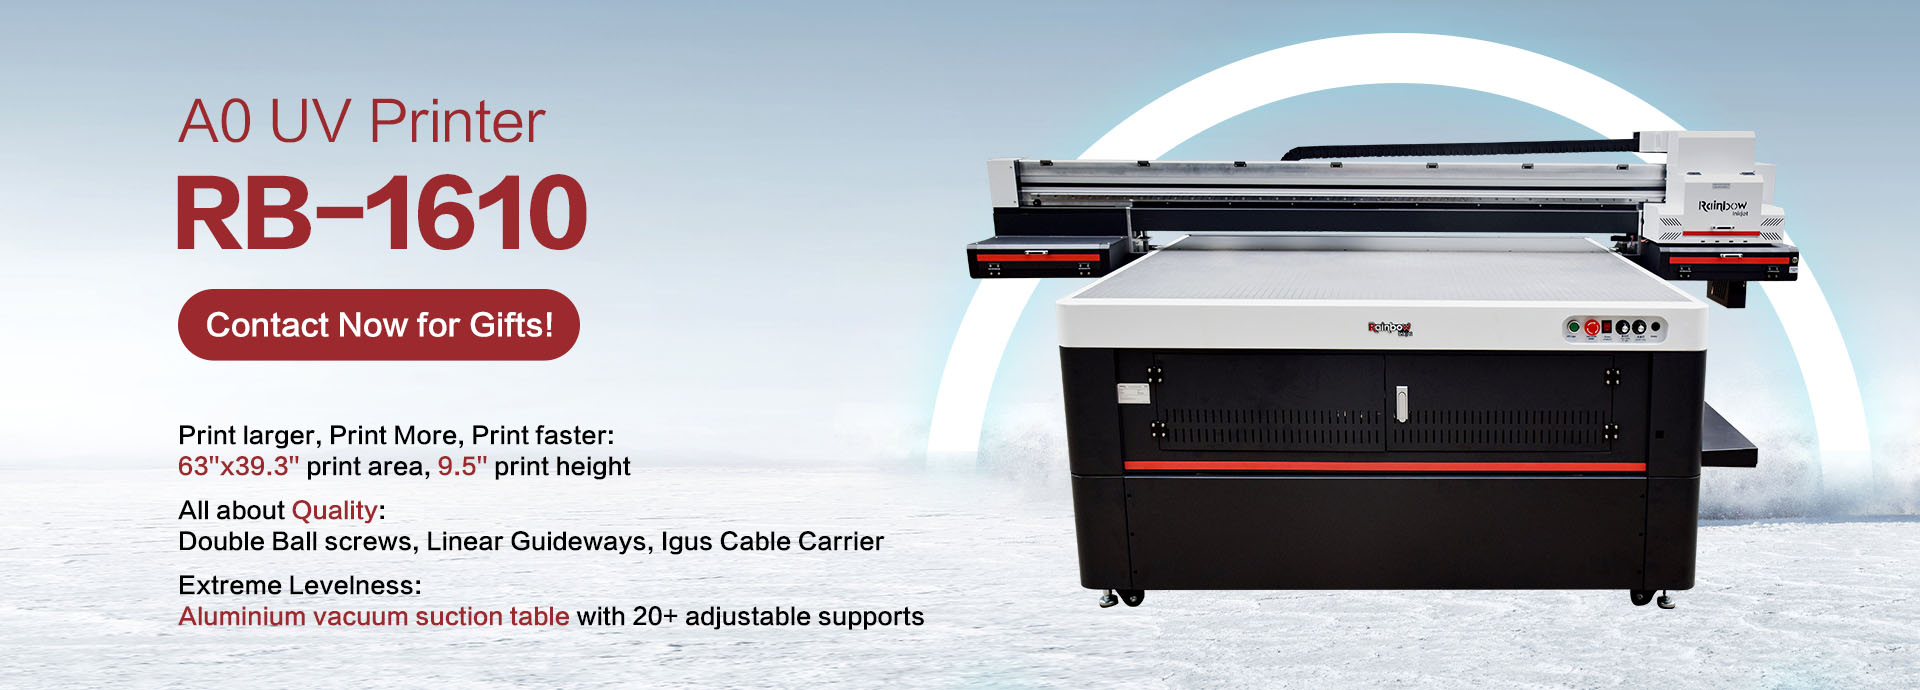 Printer flatbed uv 1610 a0